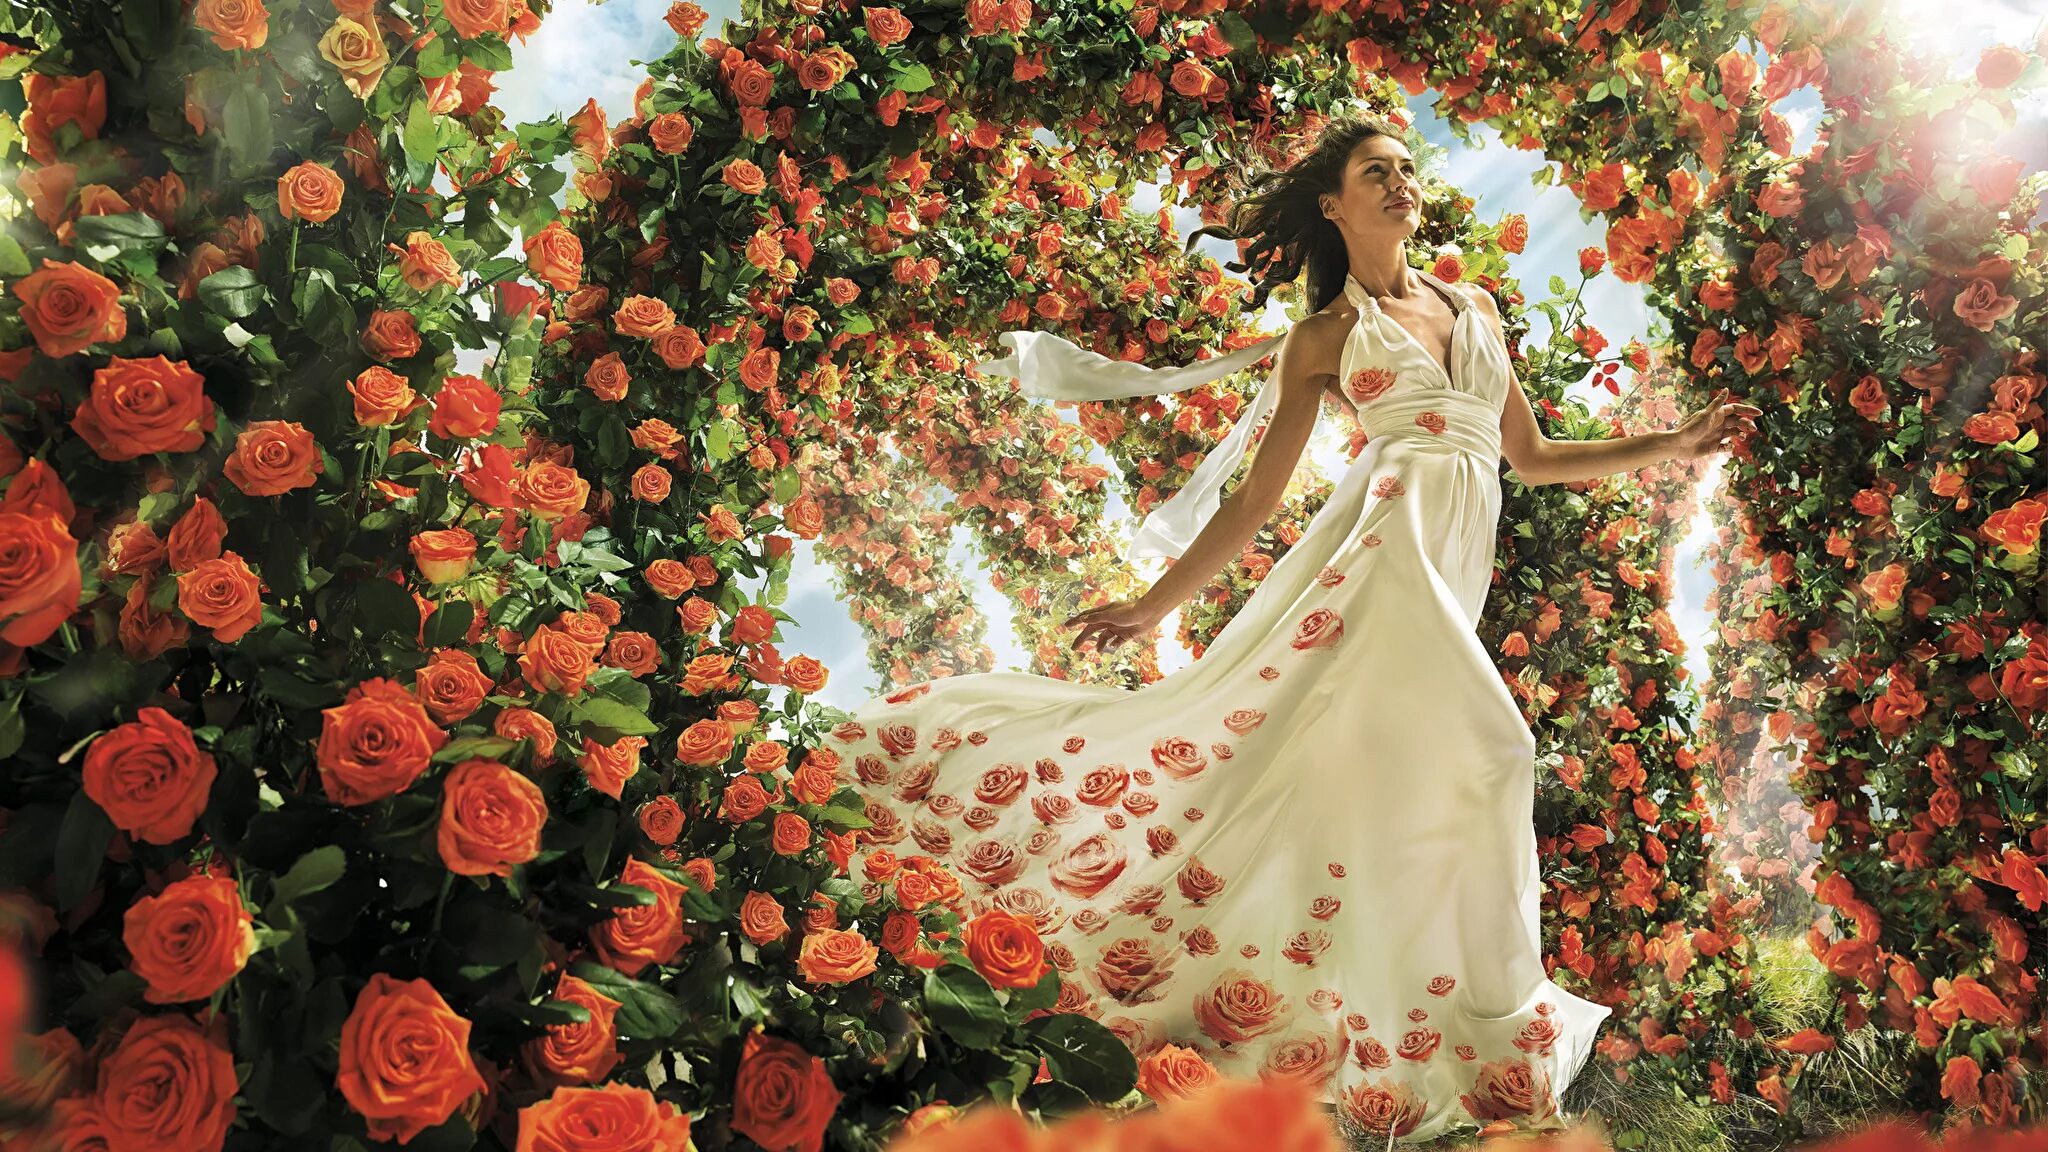 Девушка среди цветов. Девушка в саду. Девушка в цветочном саду. Фотосессия с розами.